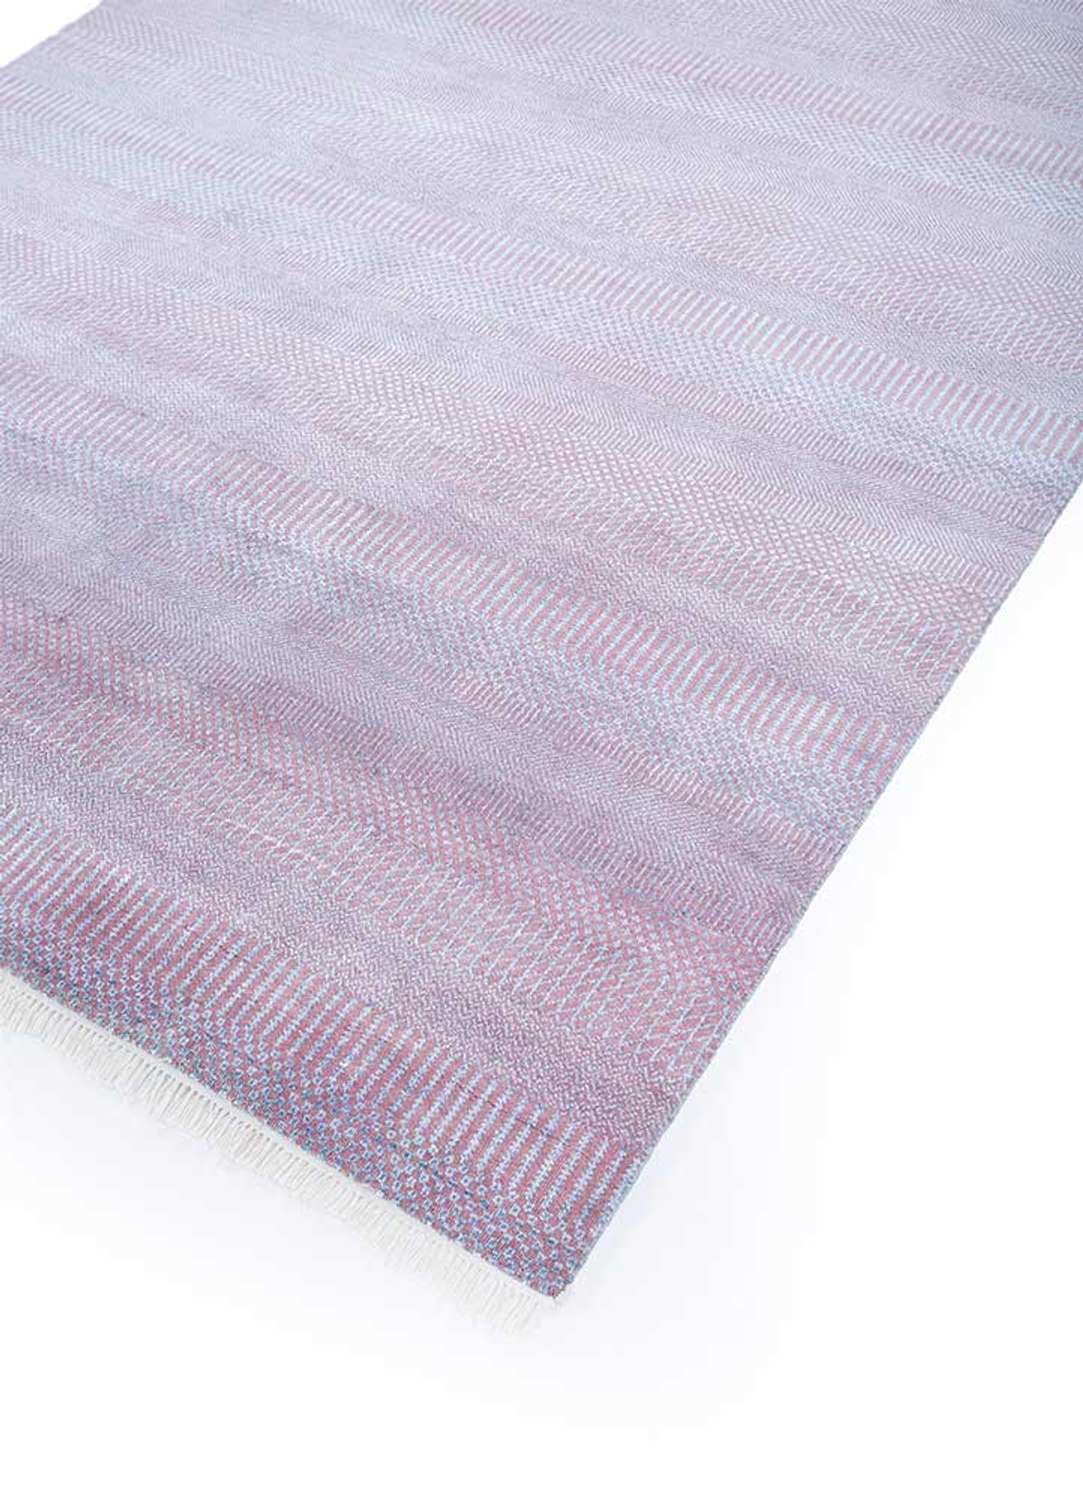 Tapis en laine - Jakari - rectangle